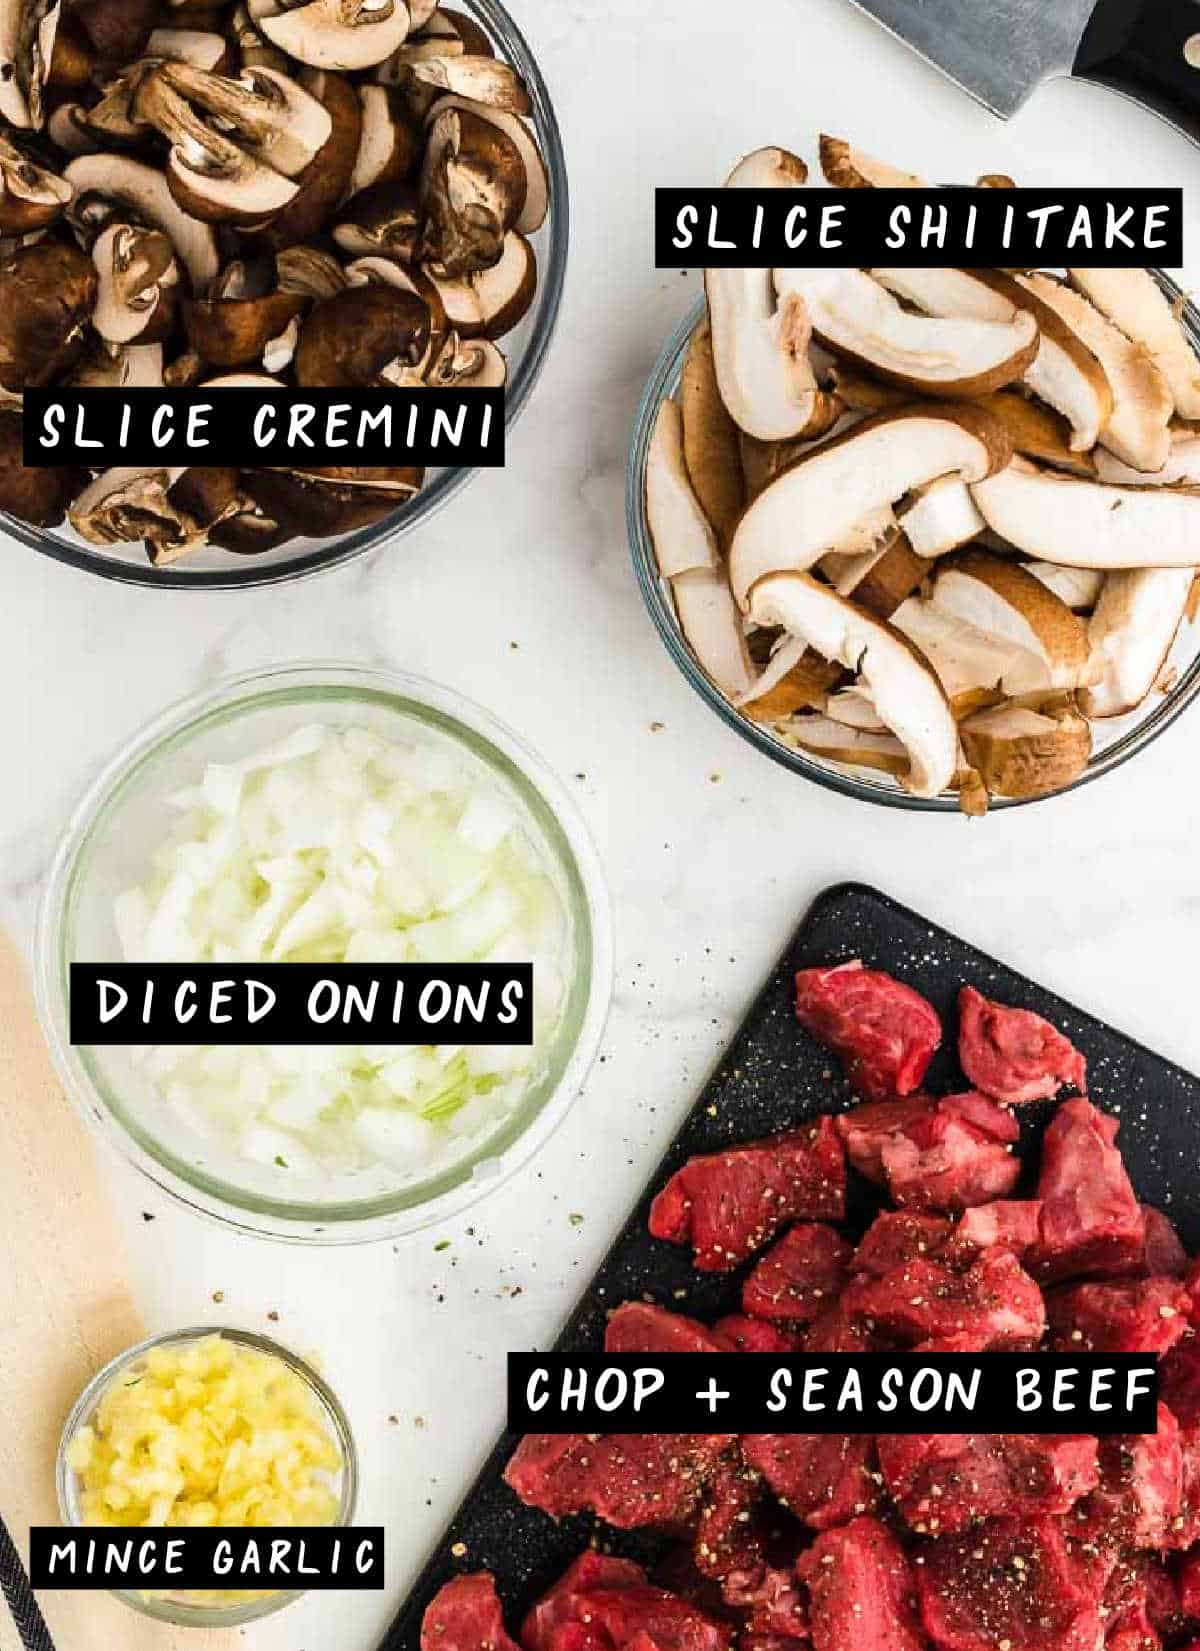 PREP STEP: Dice cremini and shiitake, dice onions, mince garlic, chop and season beef